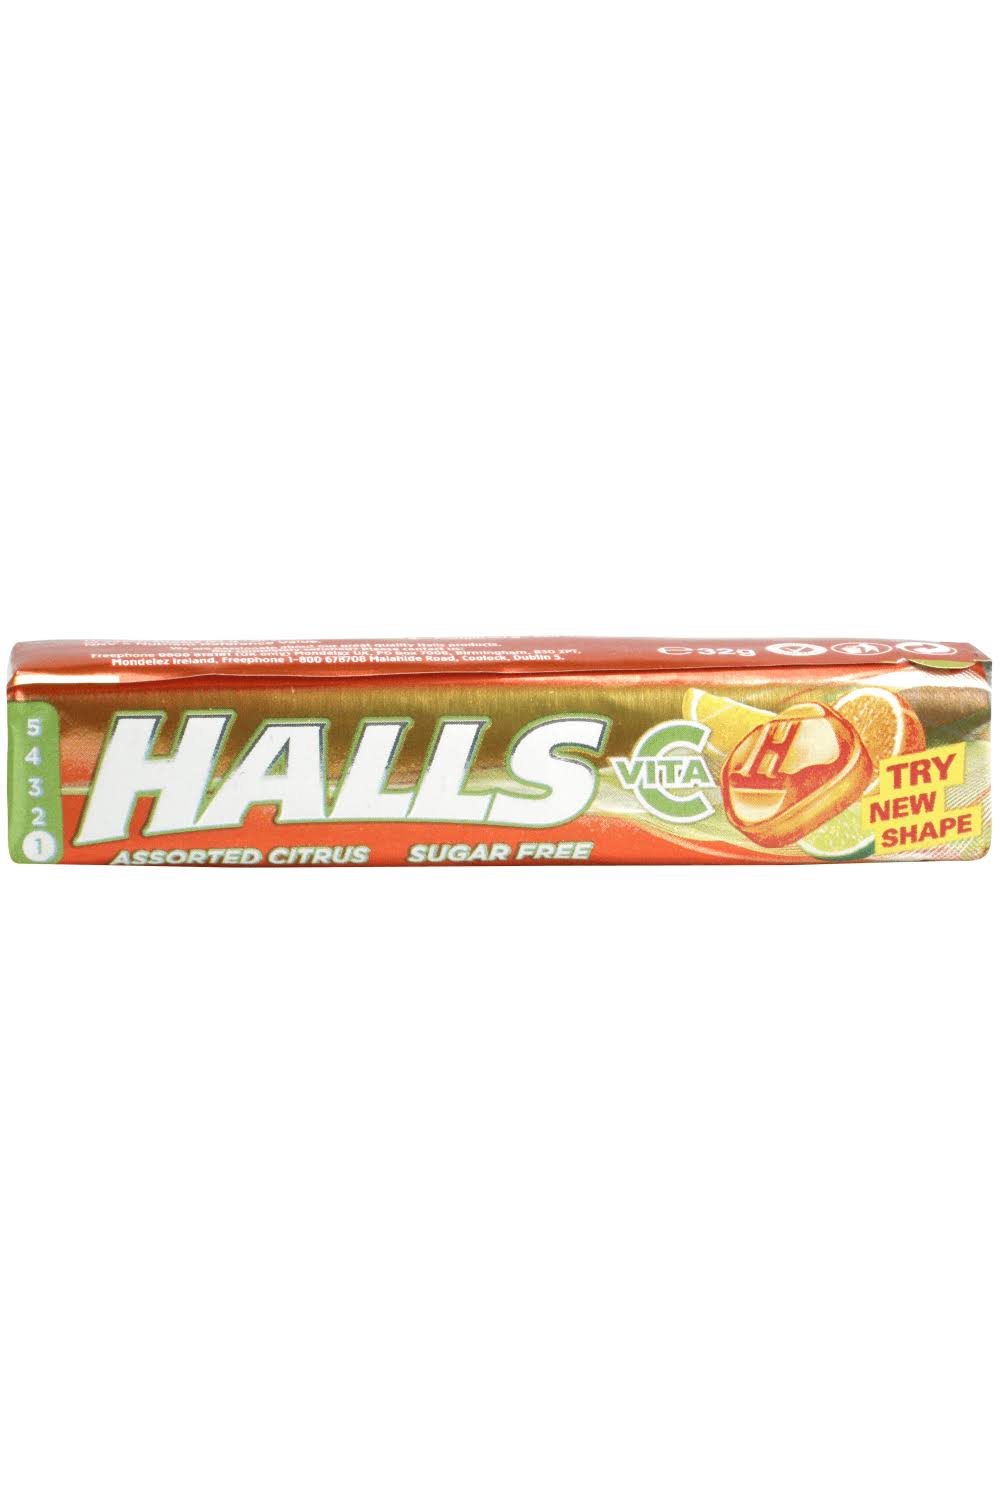 Halls Mentholyptus Citrus Sugar Free 32G